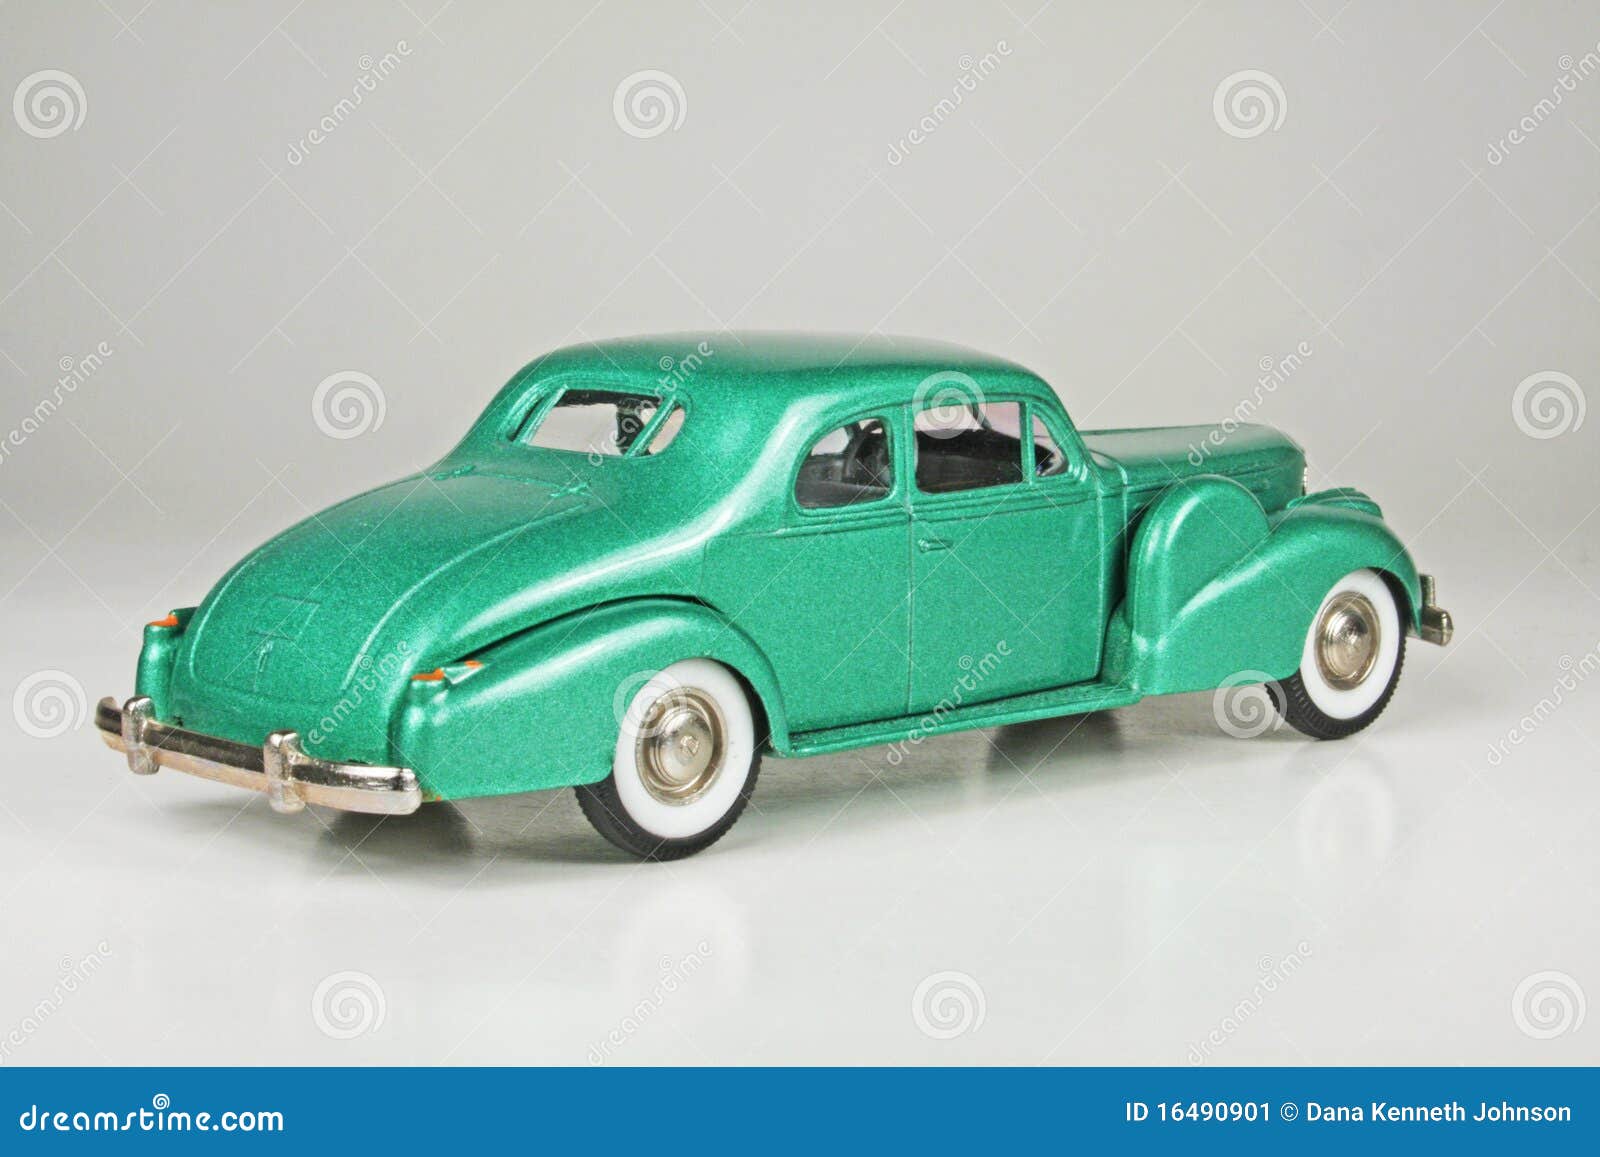 cadillac v16 2-door coupe 1938-1940